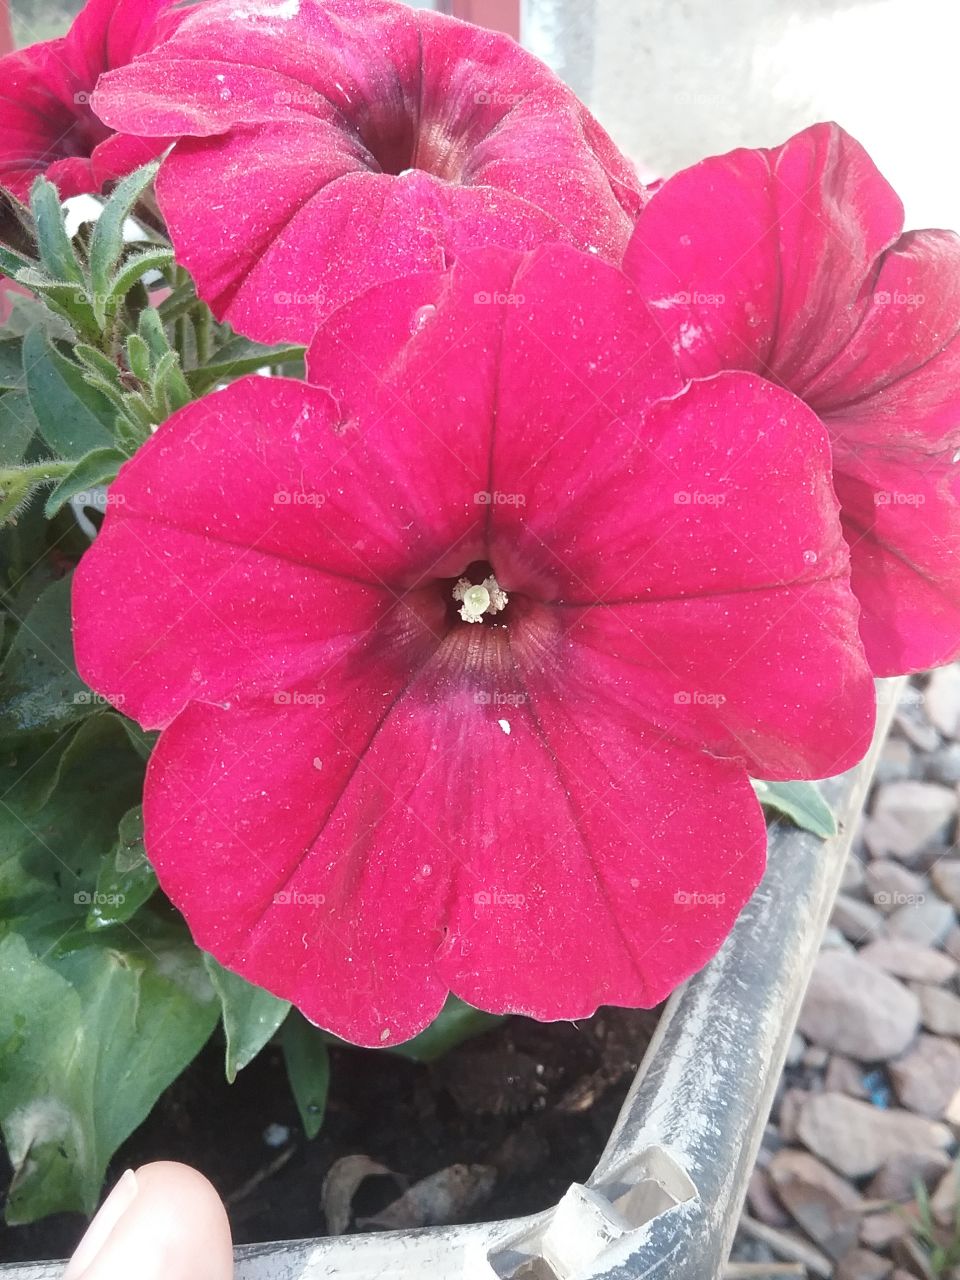 Red Petunia